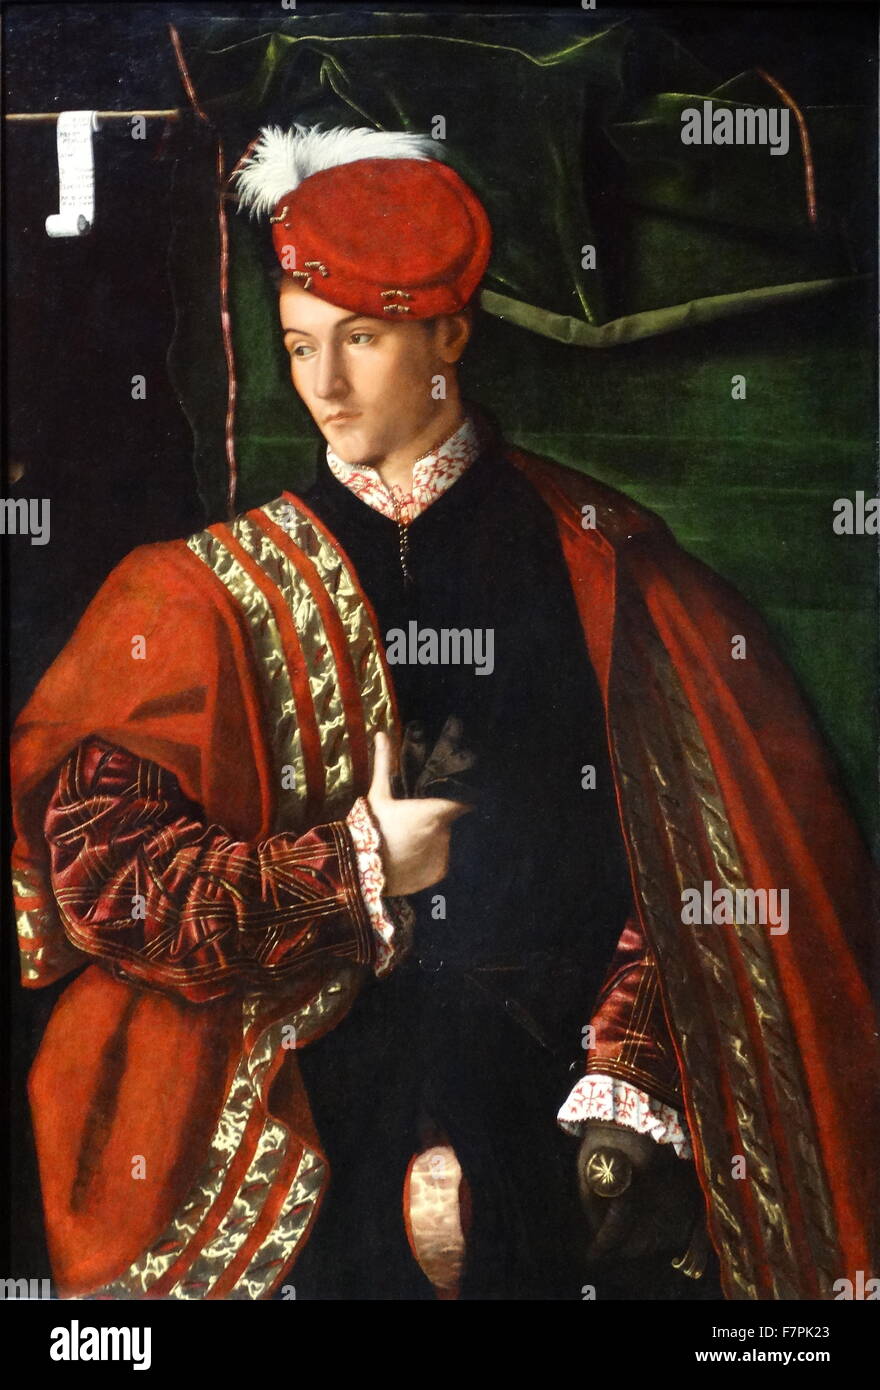 Retrato de Lodovico Martinengo por Bartolomeo Veneto (activo 1502-1546), pintor italiano. Fecha del siglo XV. Foto de stock